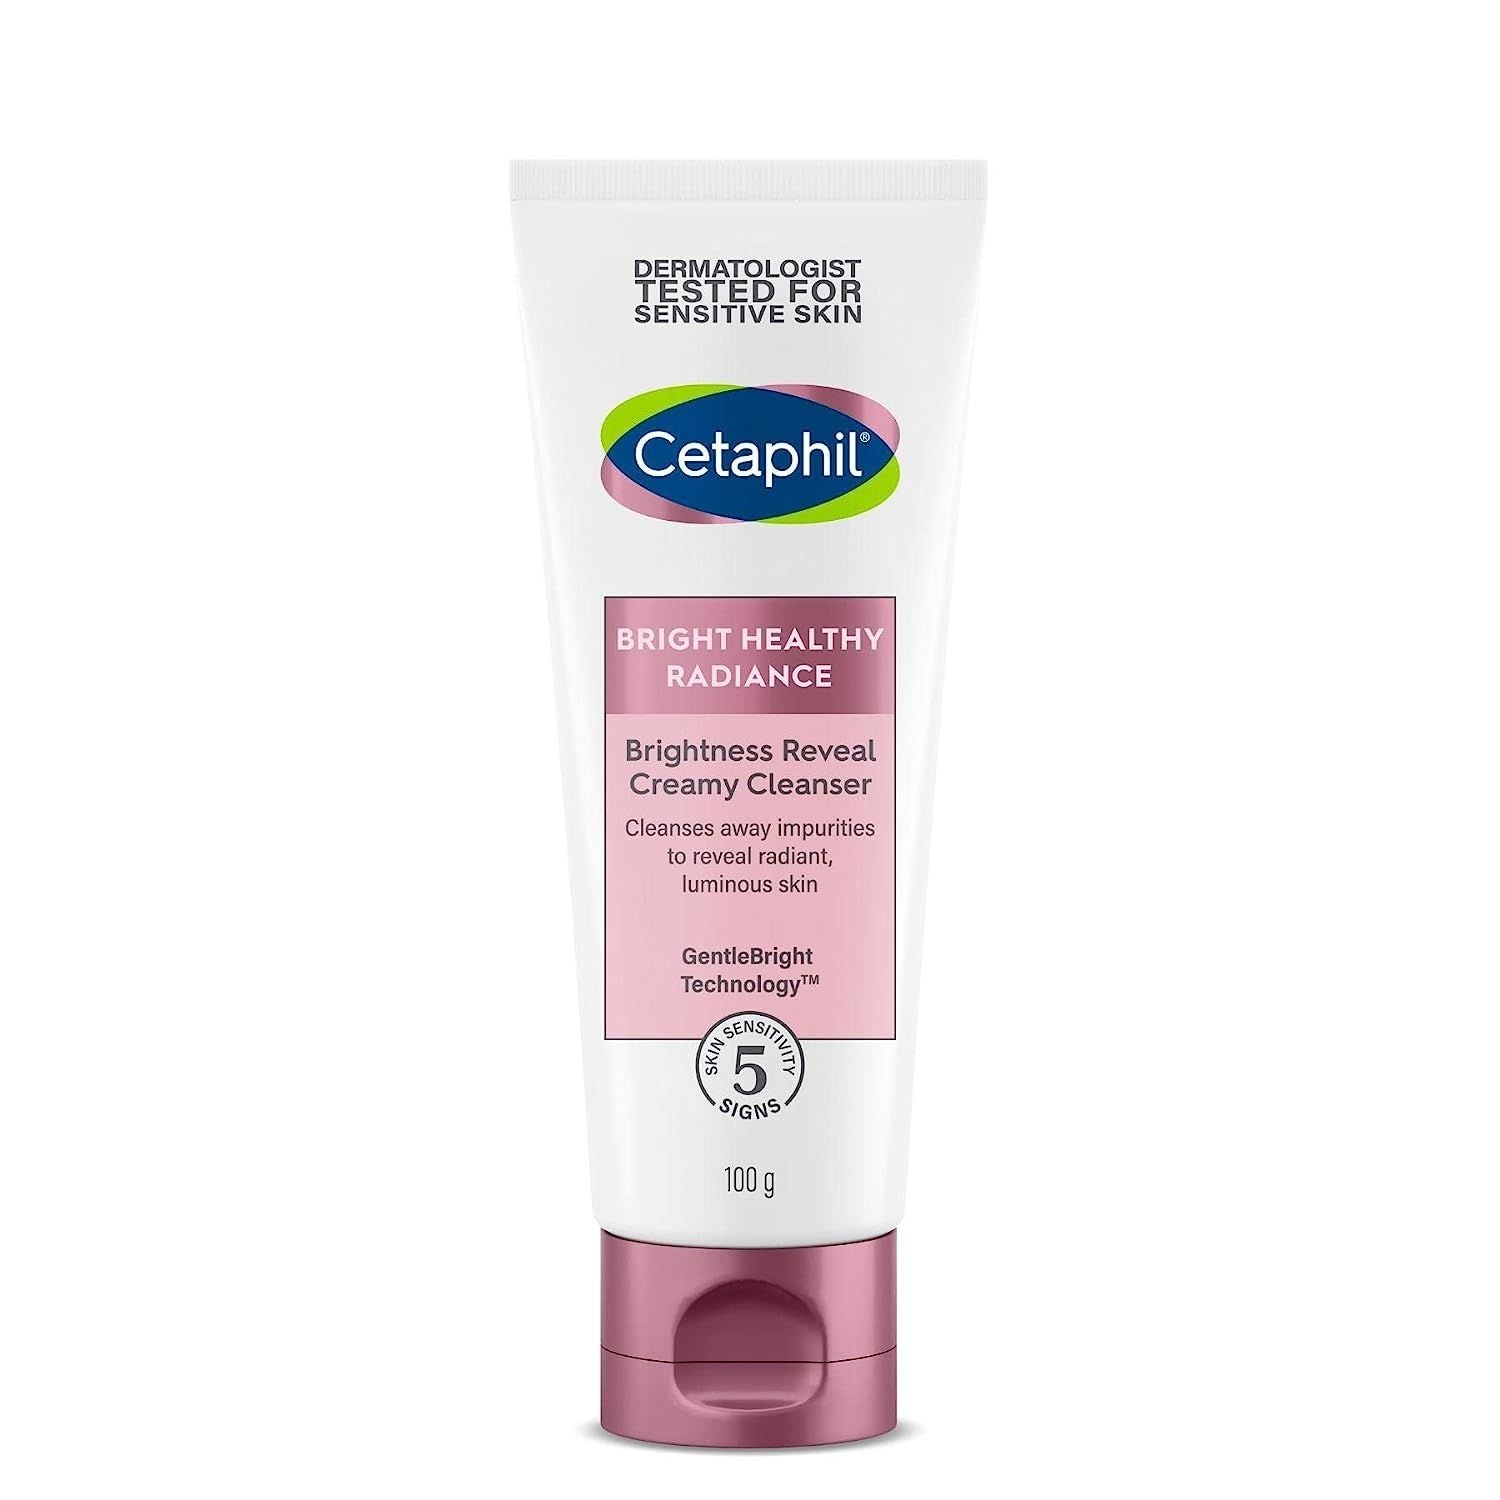 Cetaphil Brightness Reveal Creamy Cleanser - 100 g